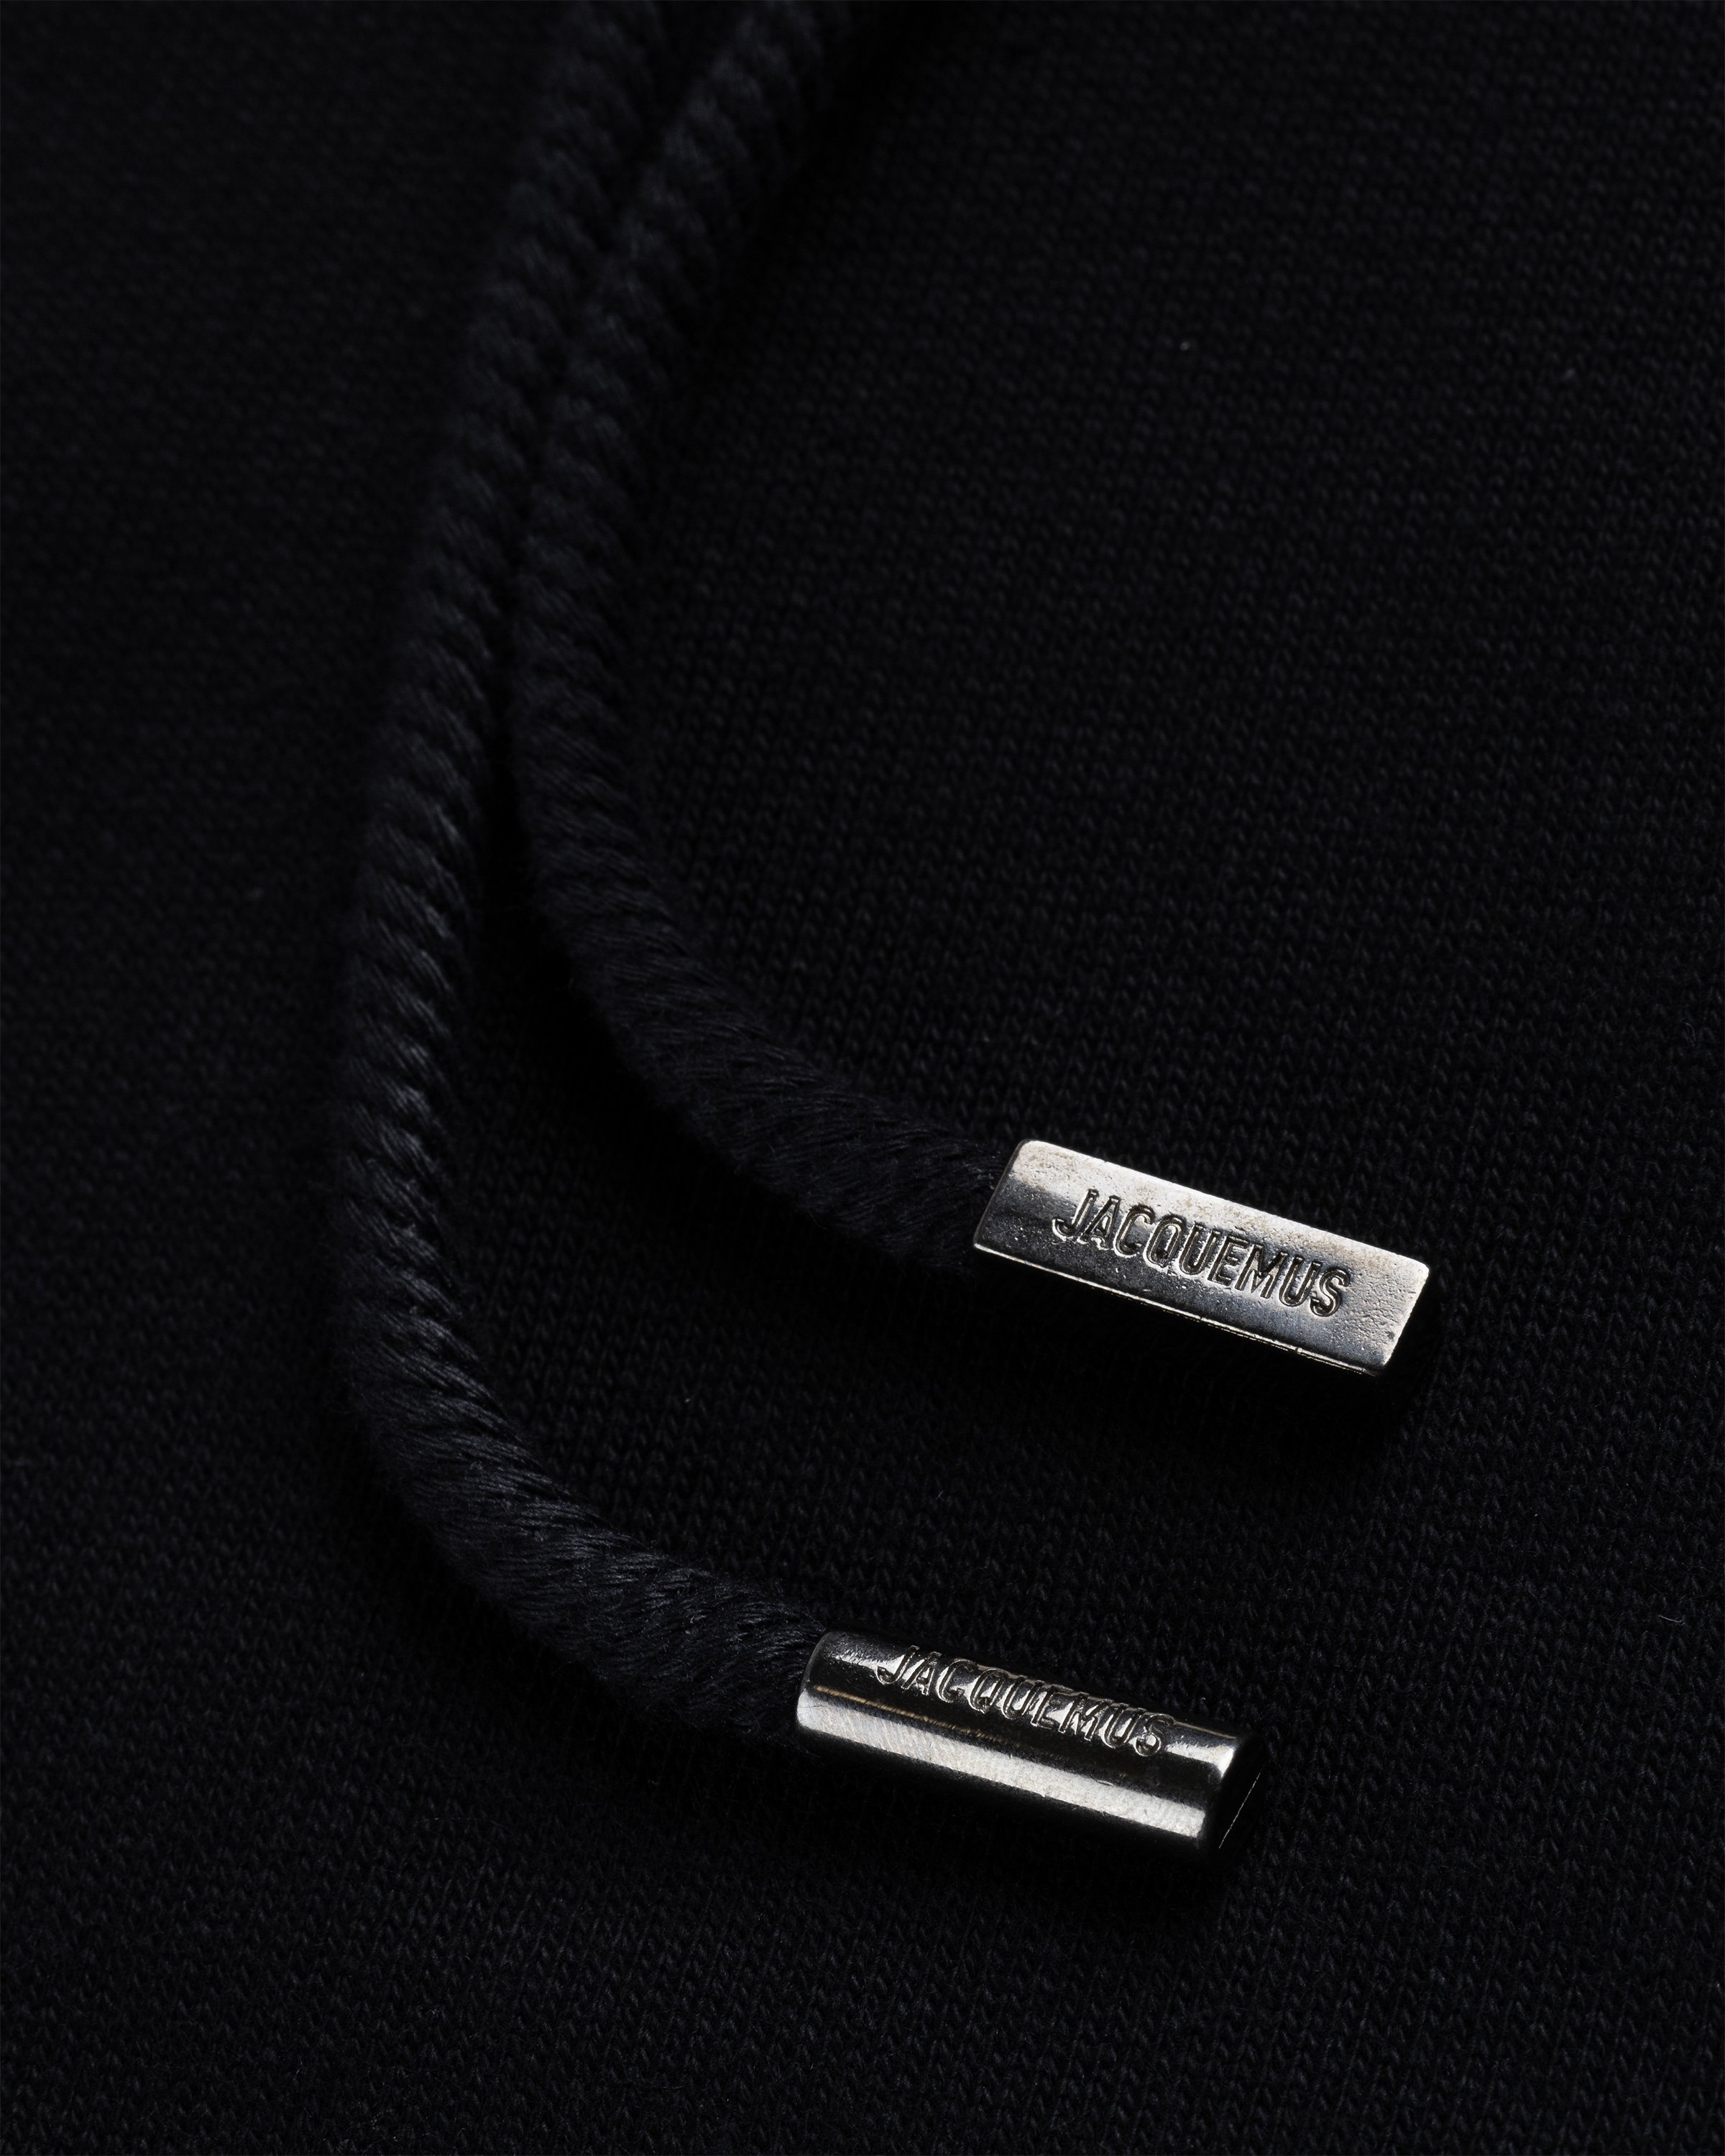 JACQUEMUS - Le Sweatshirt Brode Black - Clothing - BLACK - Image 6